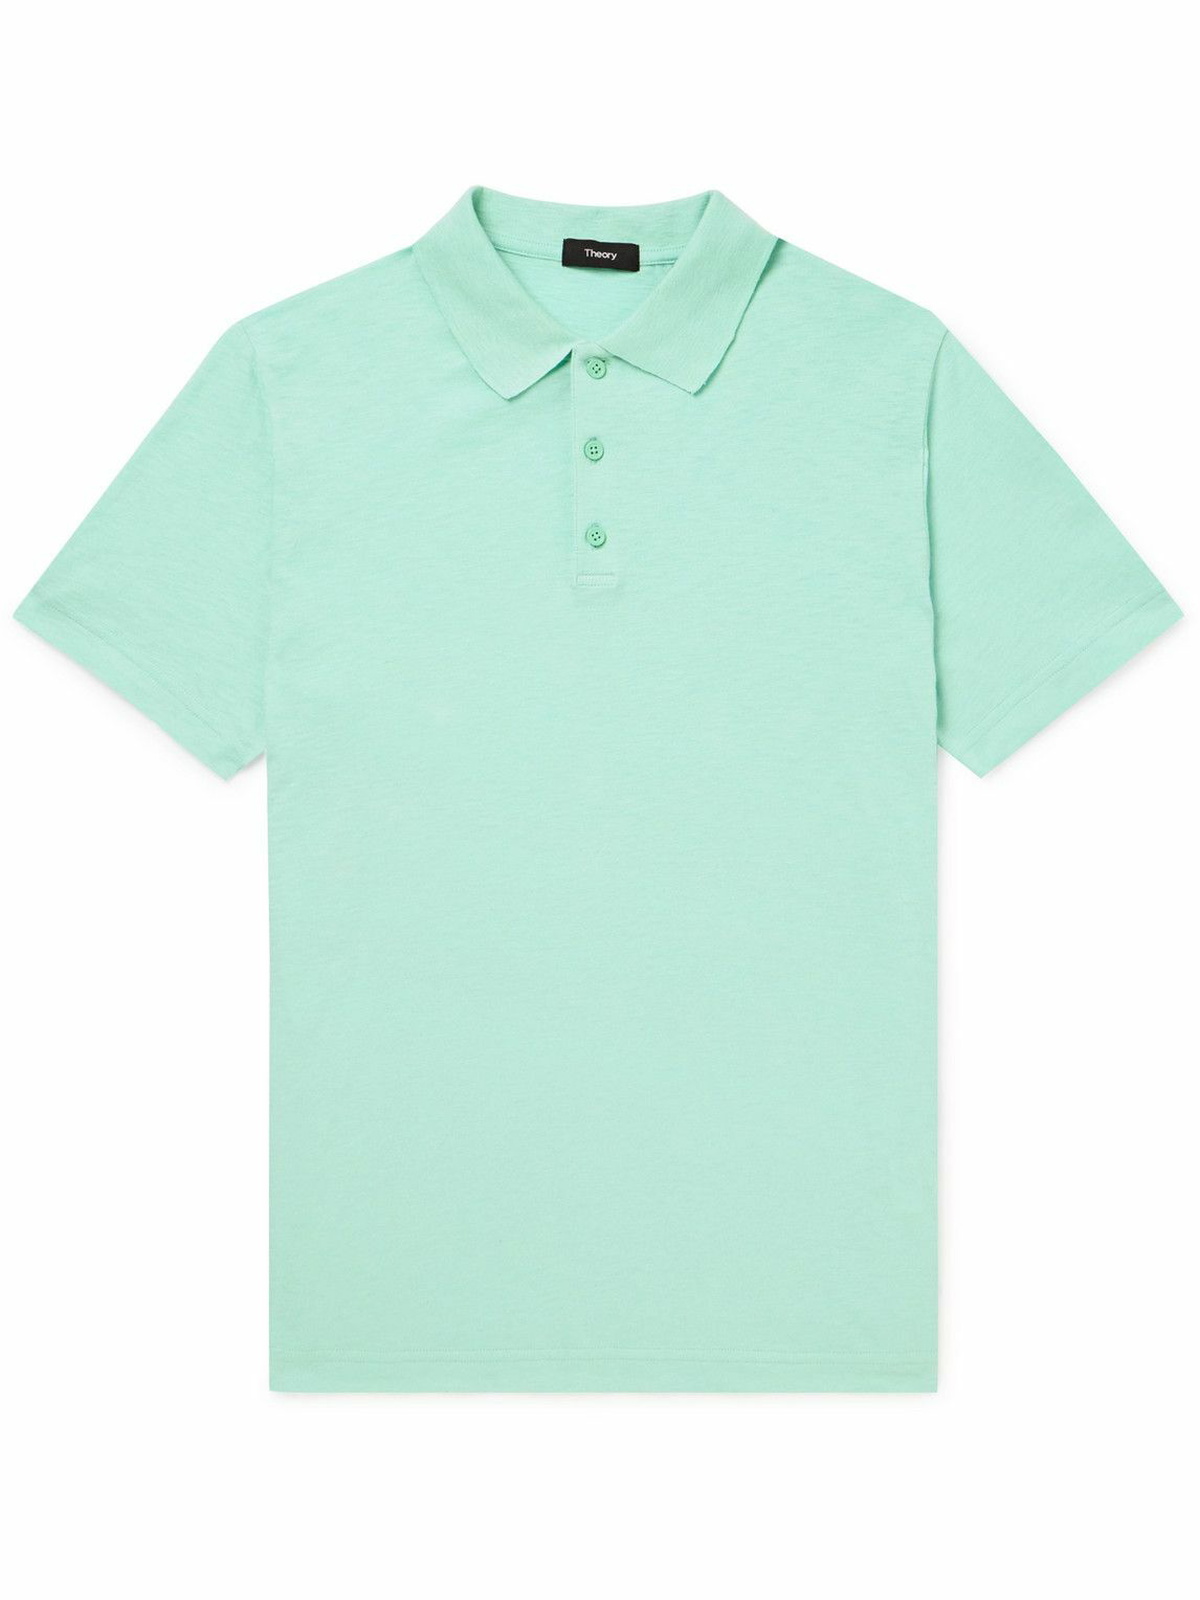 Theory - Bron Slub Cotton-Jersey Polo Shirt - Green Theory